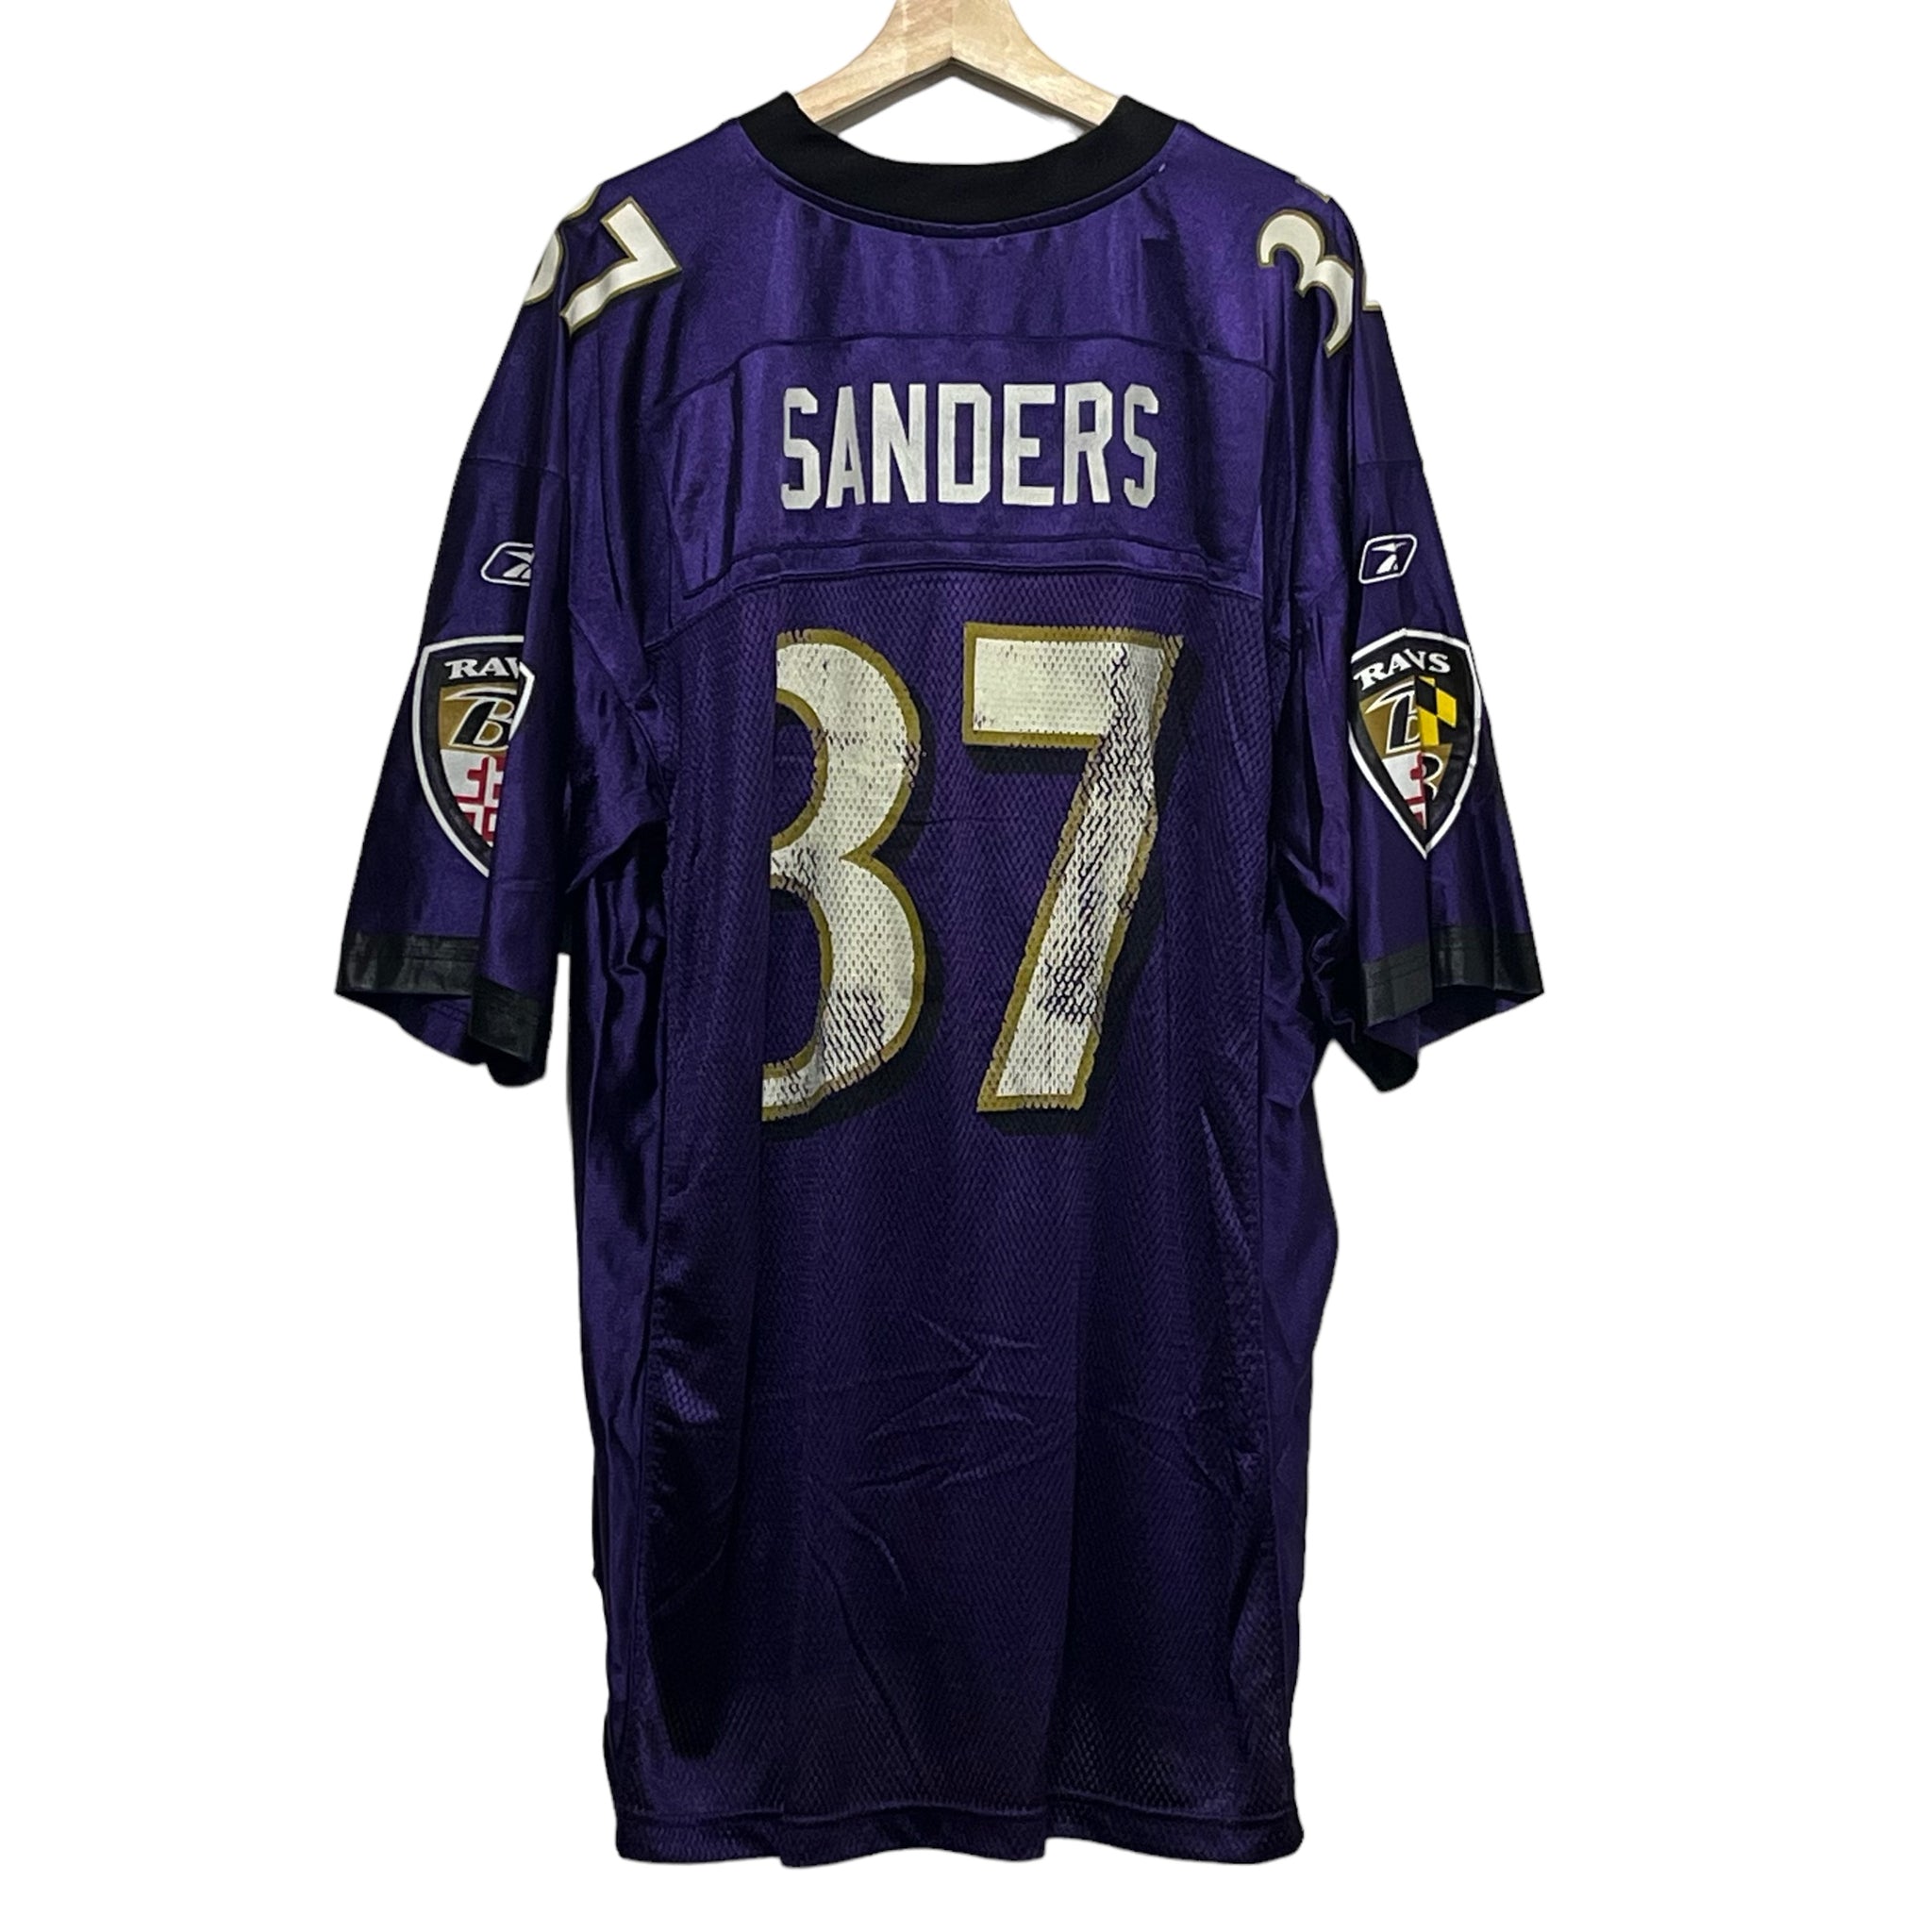 2004/05 Deion Sanders Baltimore Ravens Jersey XL